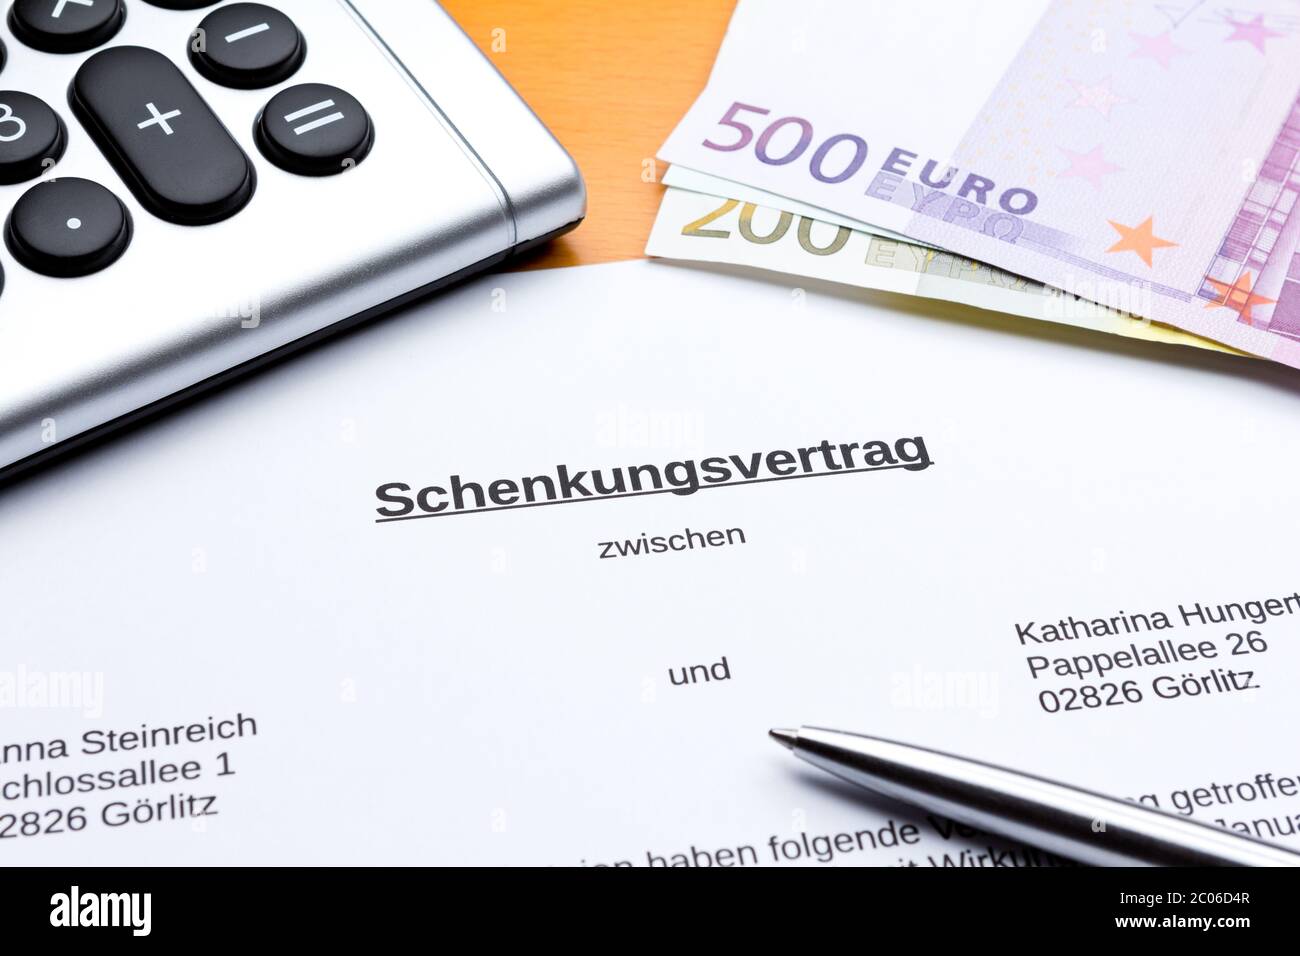 Accordo regalo in tedesco con le banconote e la calcolatrice Euro: Schenkungsvertrag. Foto Stock